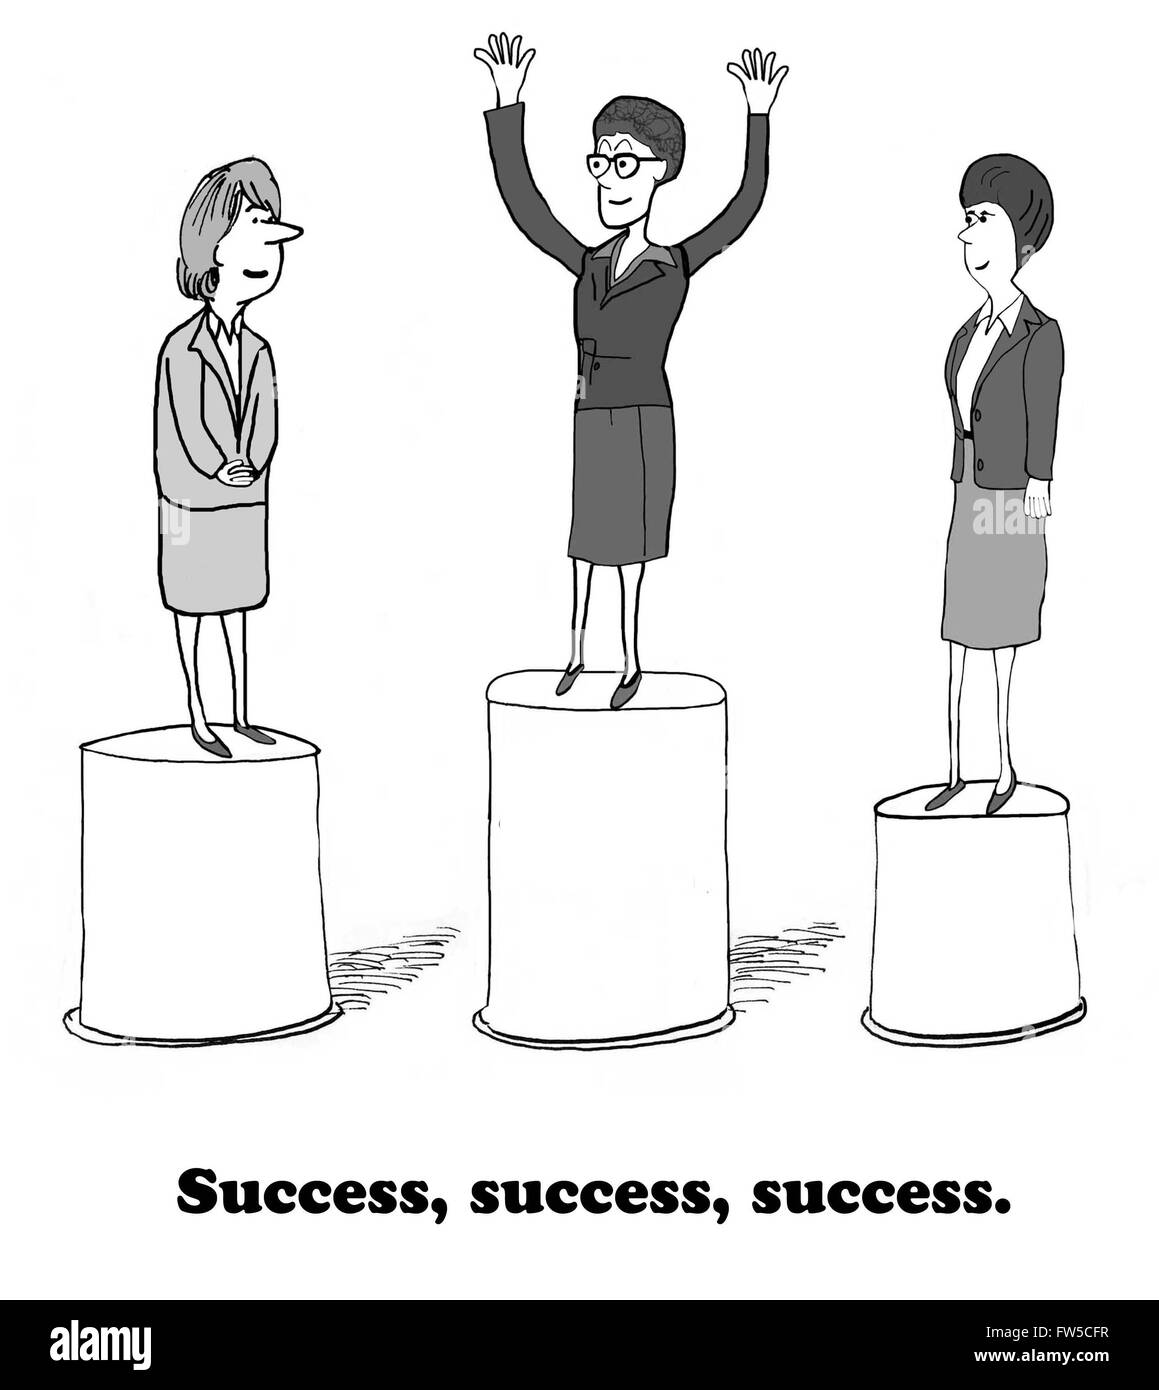 Business cartoon about success. Stock Photo